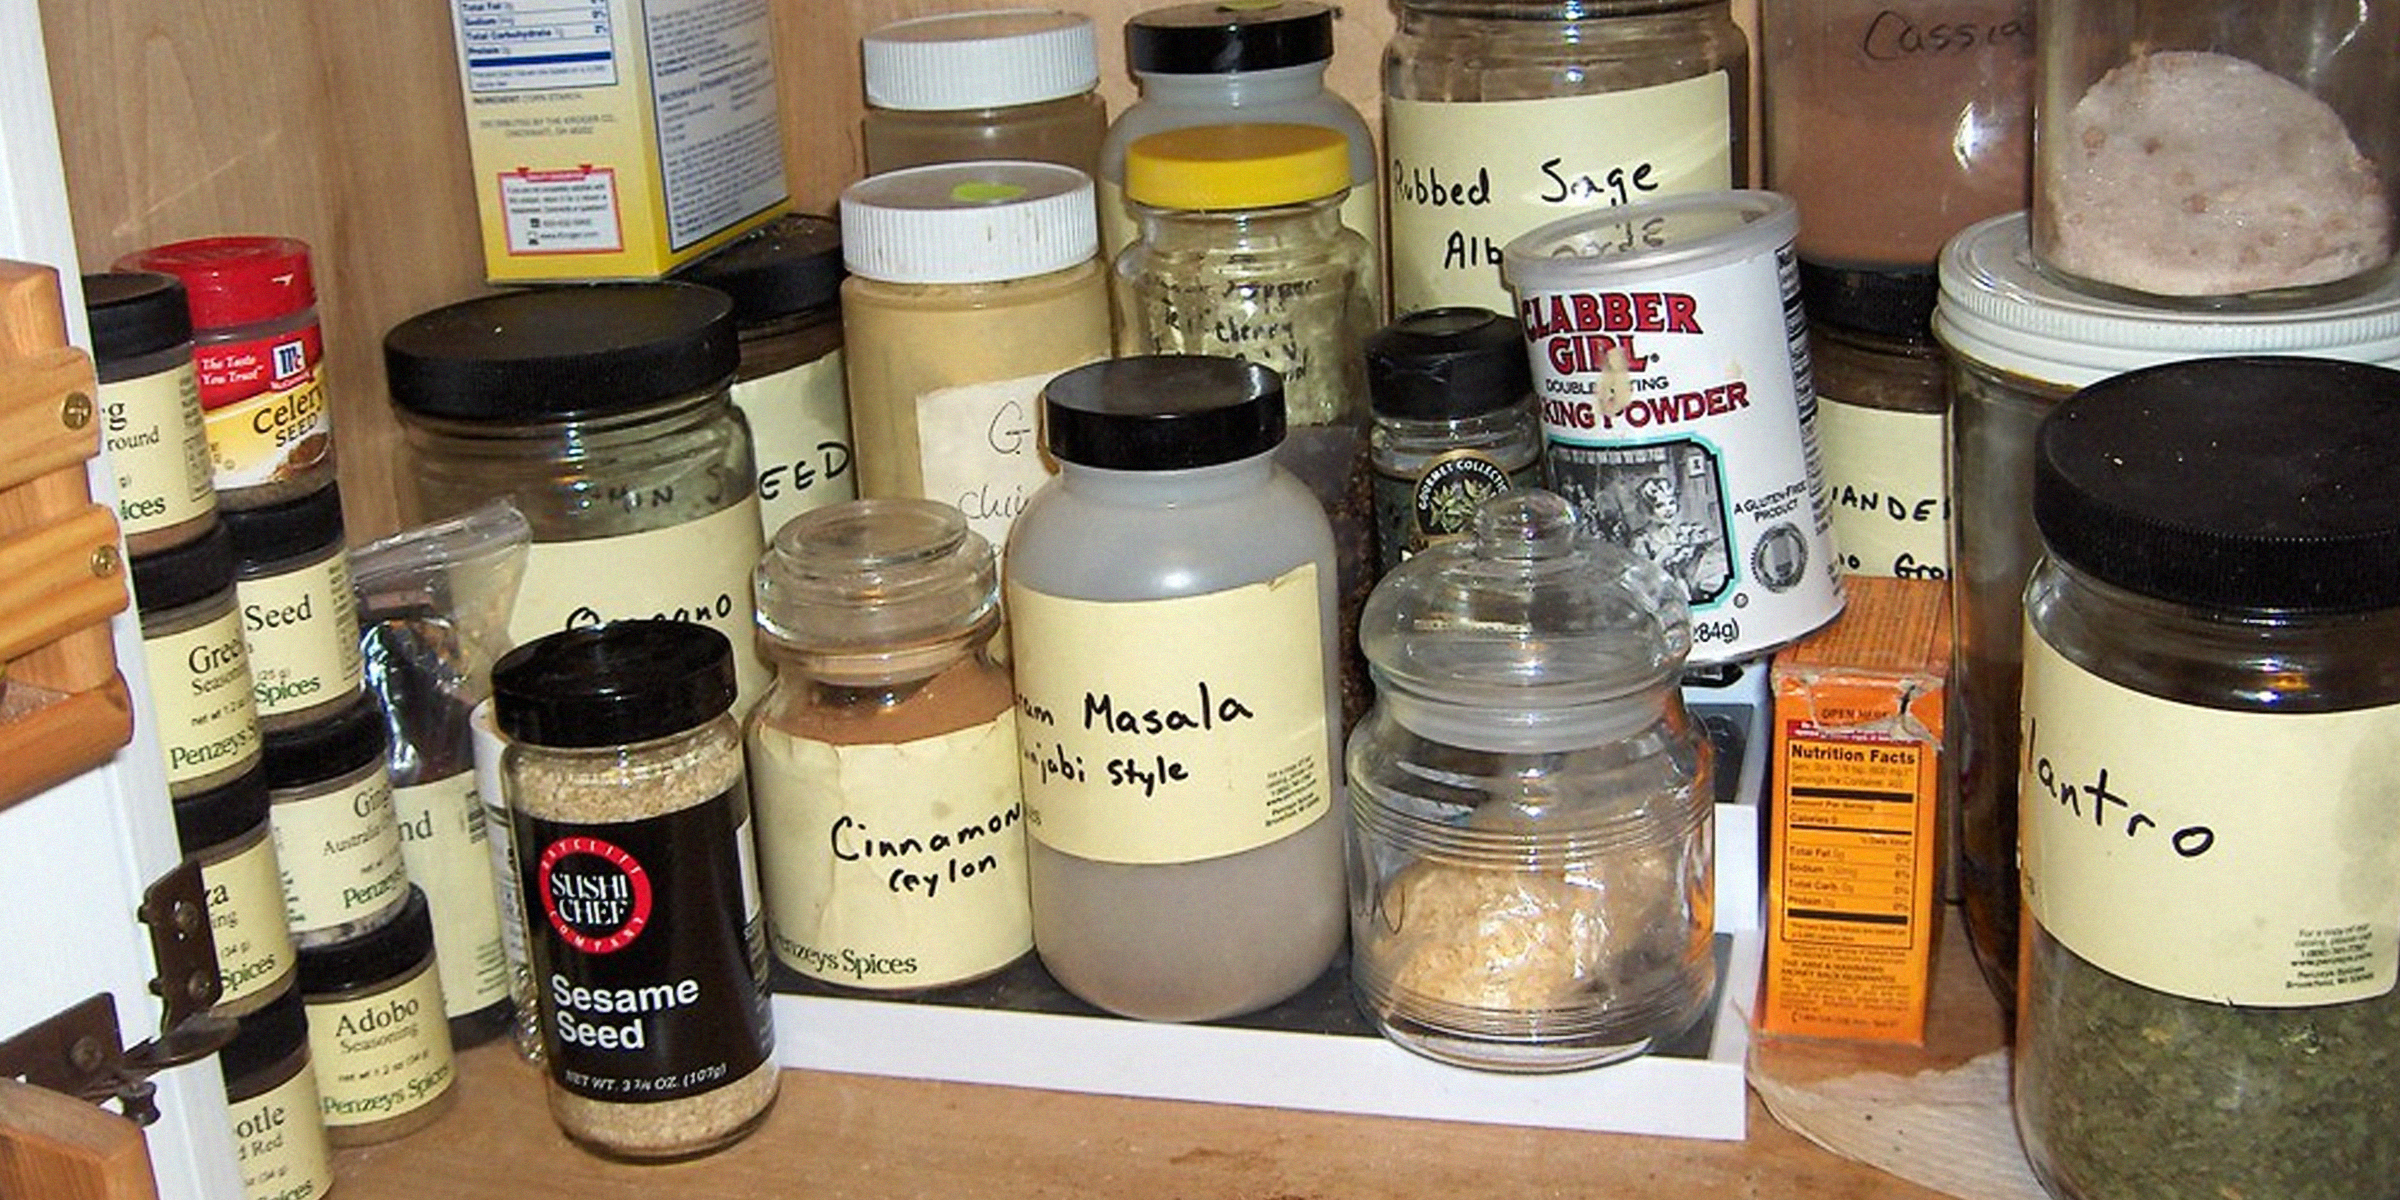 Spice cupboard | Source: Flickr